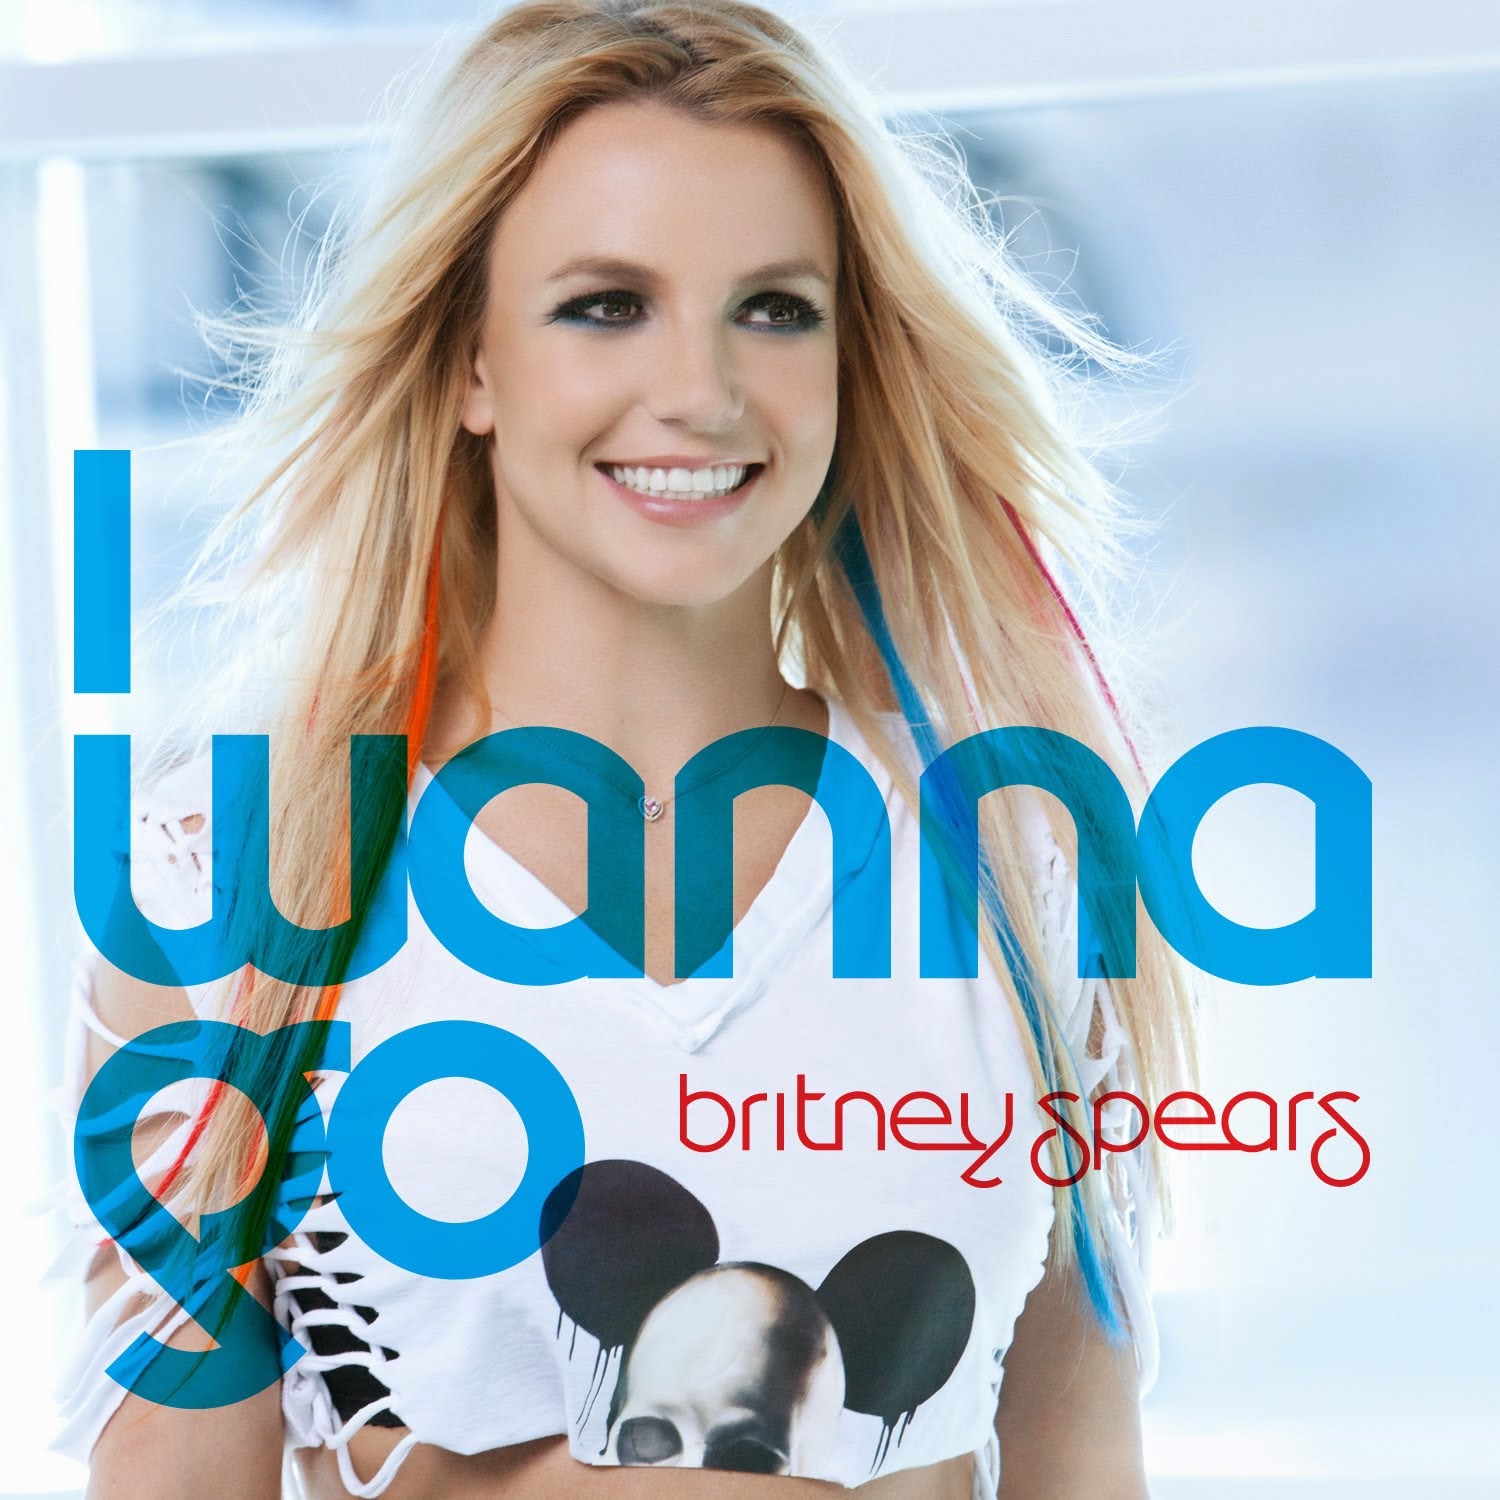 http://4.bp.blogspot.com/-OoOBGvBseW8/Tfq8JpqhX1I/AAAAAAAABKU/Z4Y_ZeTwN9E/s1600/Britney-Spears-I-Wanna-Go-Official-Single-Cover.jpg